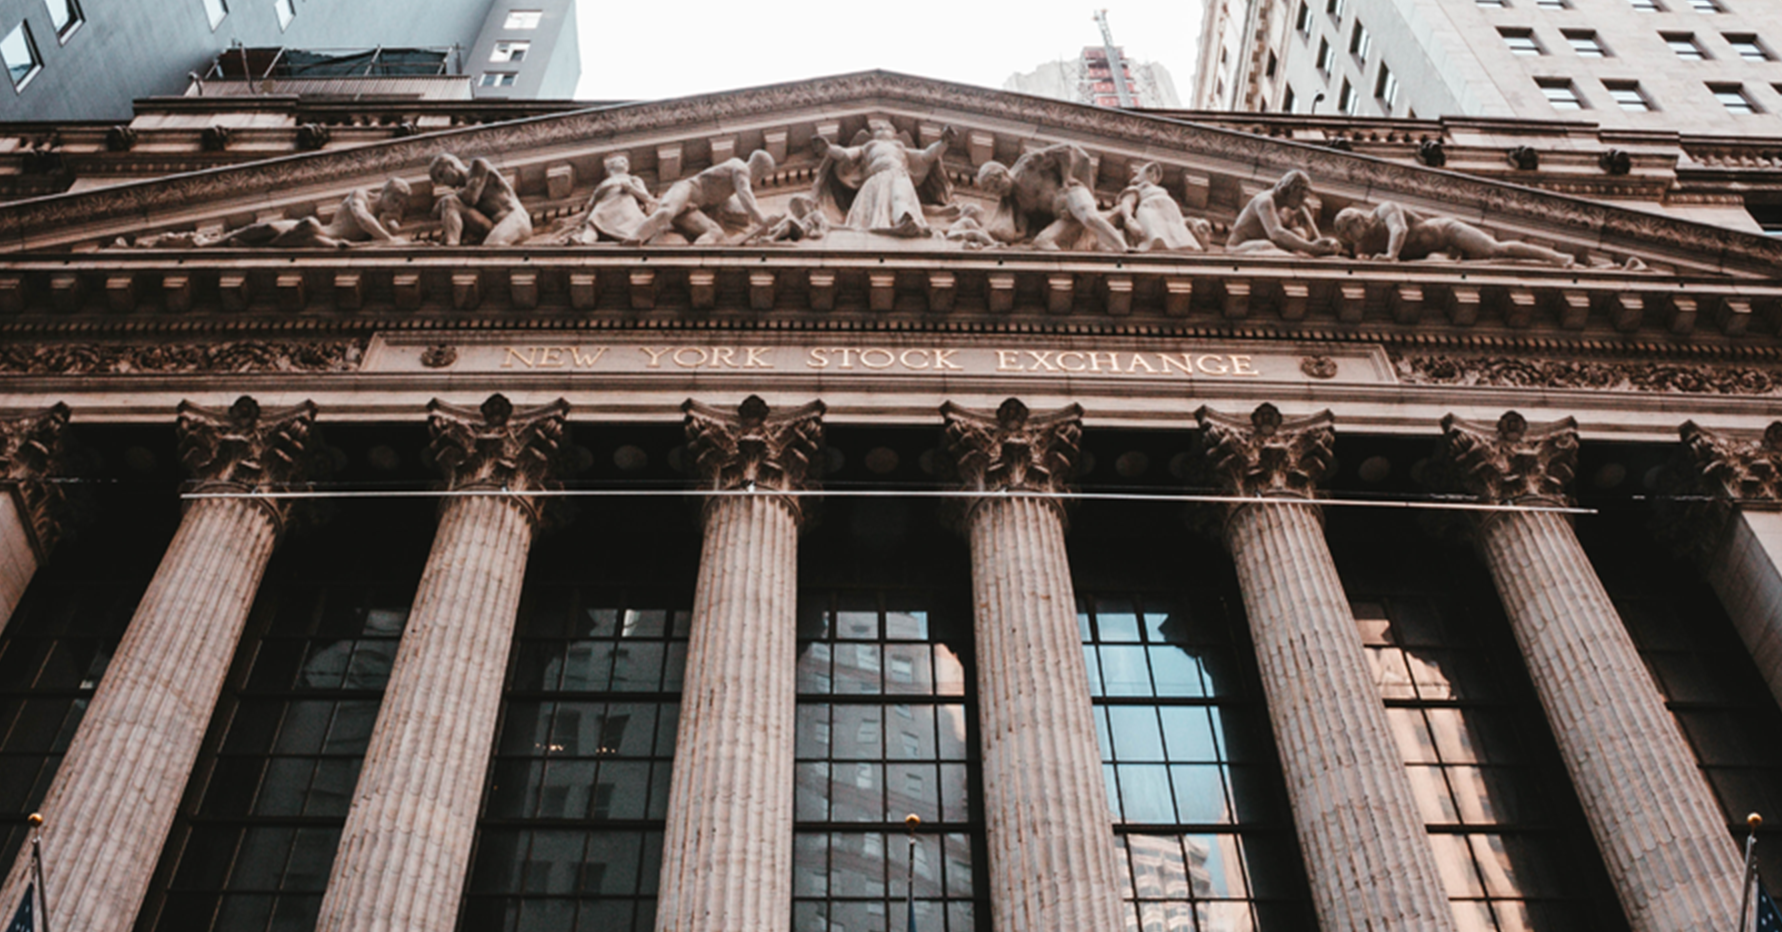 Photograph of New York Stock Exchange building